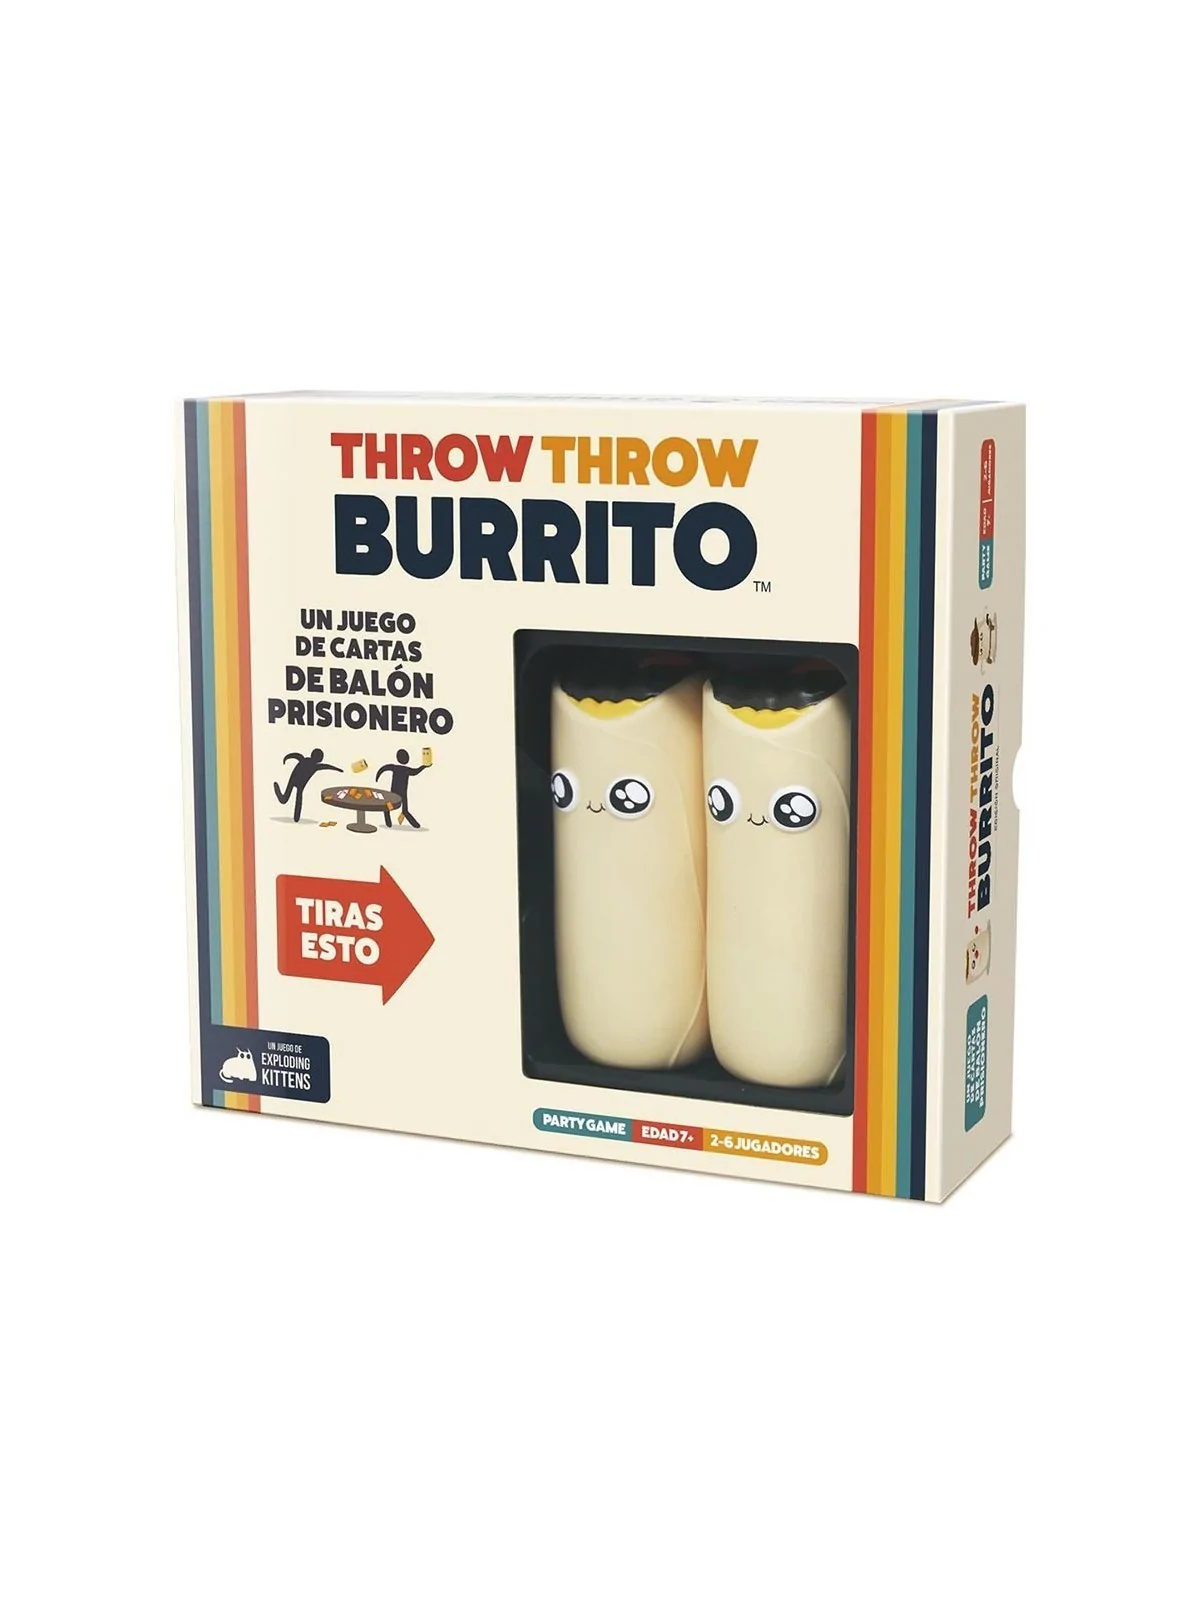 Comprar Throw Throw Burrito barato al mejor precio 24,99 € de Explodin